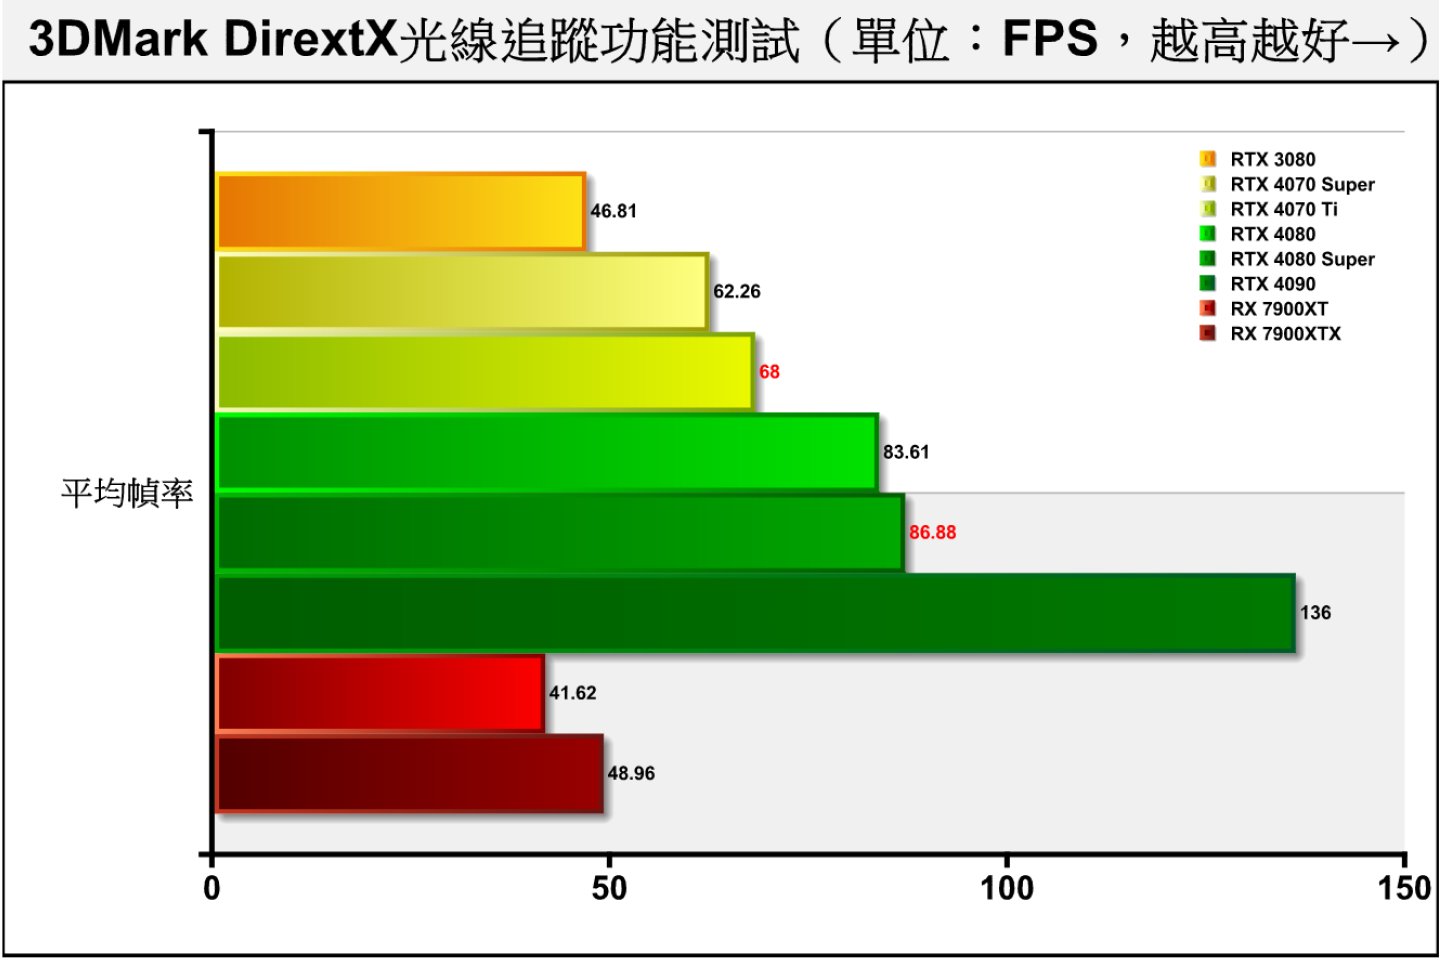 3DMark DirextX光線追蹤功能測試同樣採用DXR技術，RTX 4080 Super領先幅度擴大至3.91%。